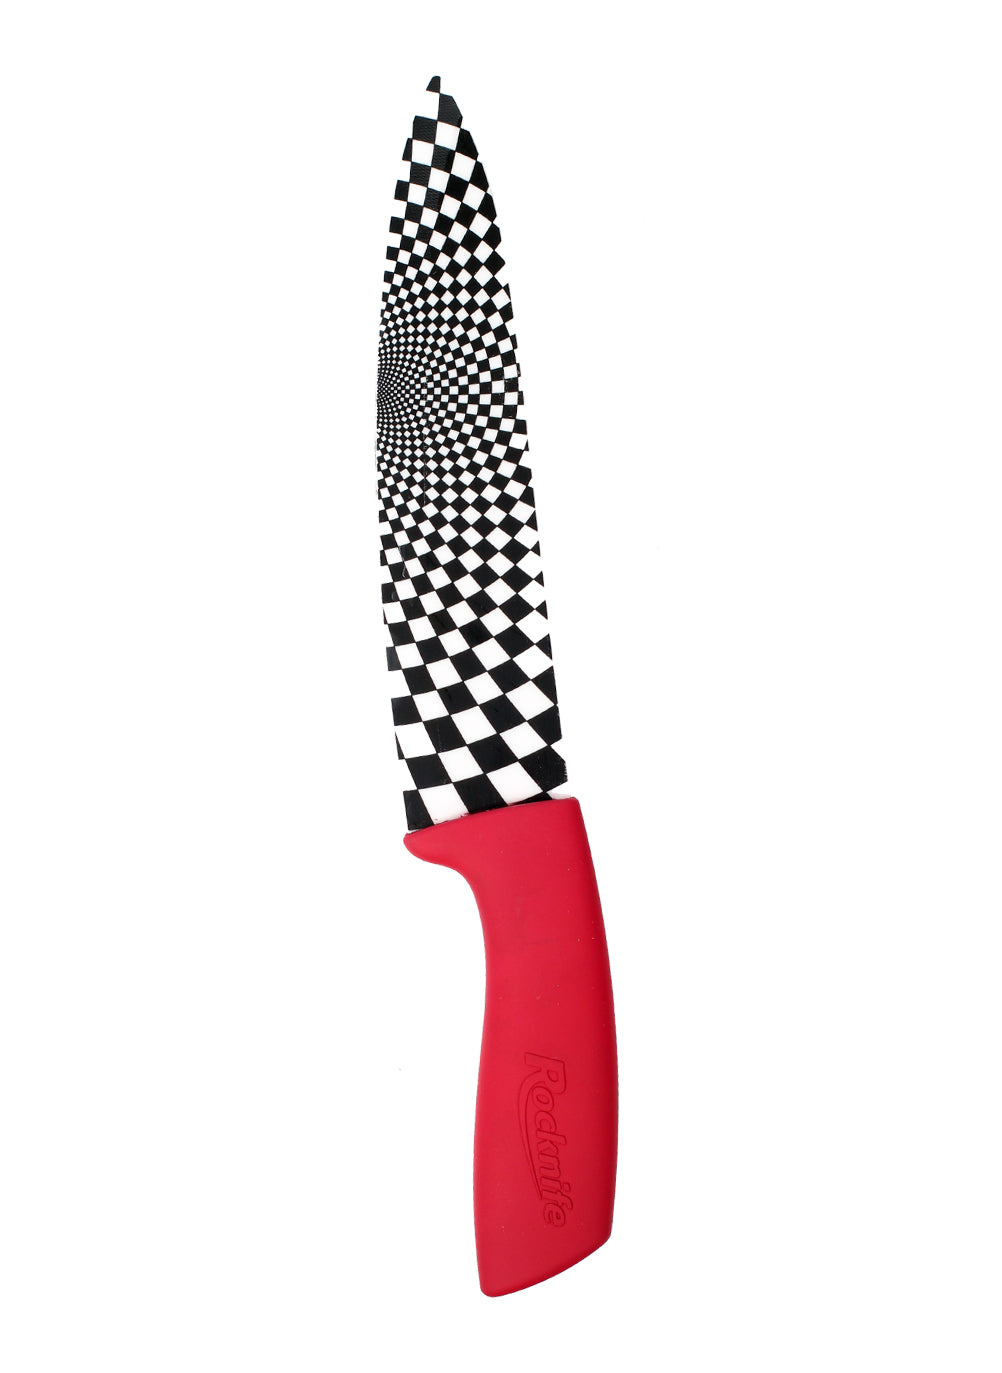 8 Inch Ceramic Kitchen Knife - Red